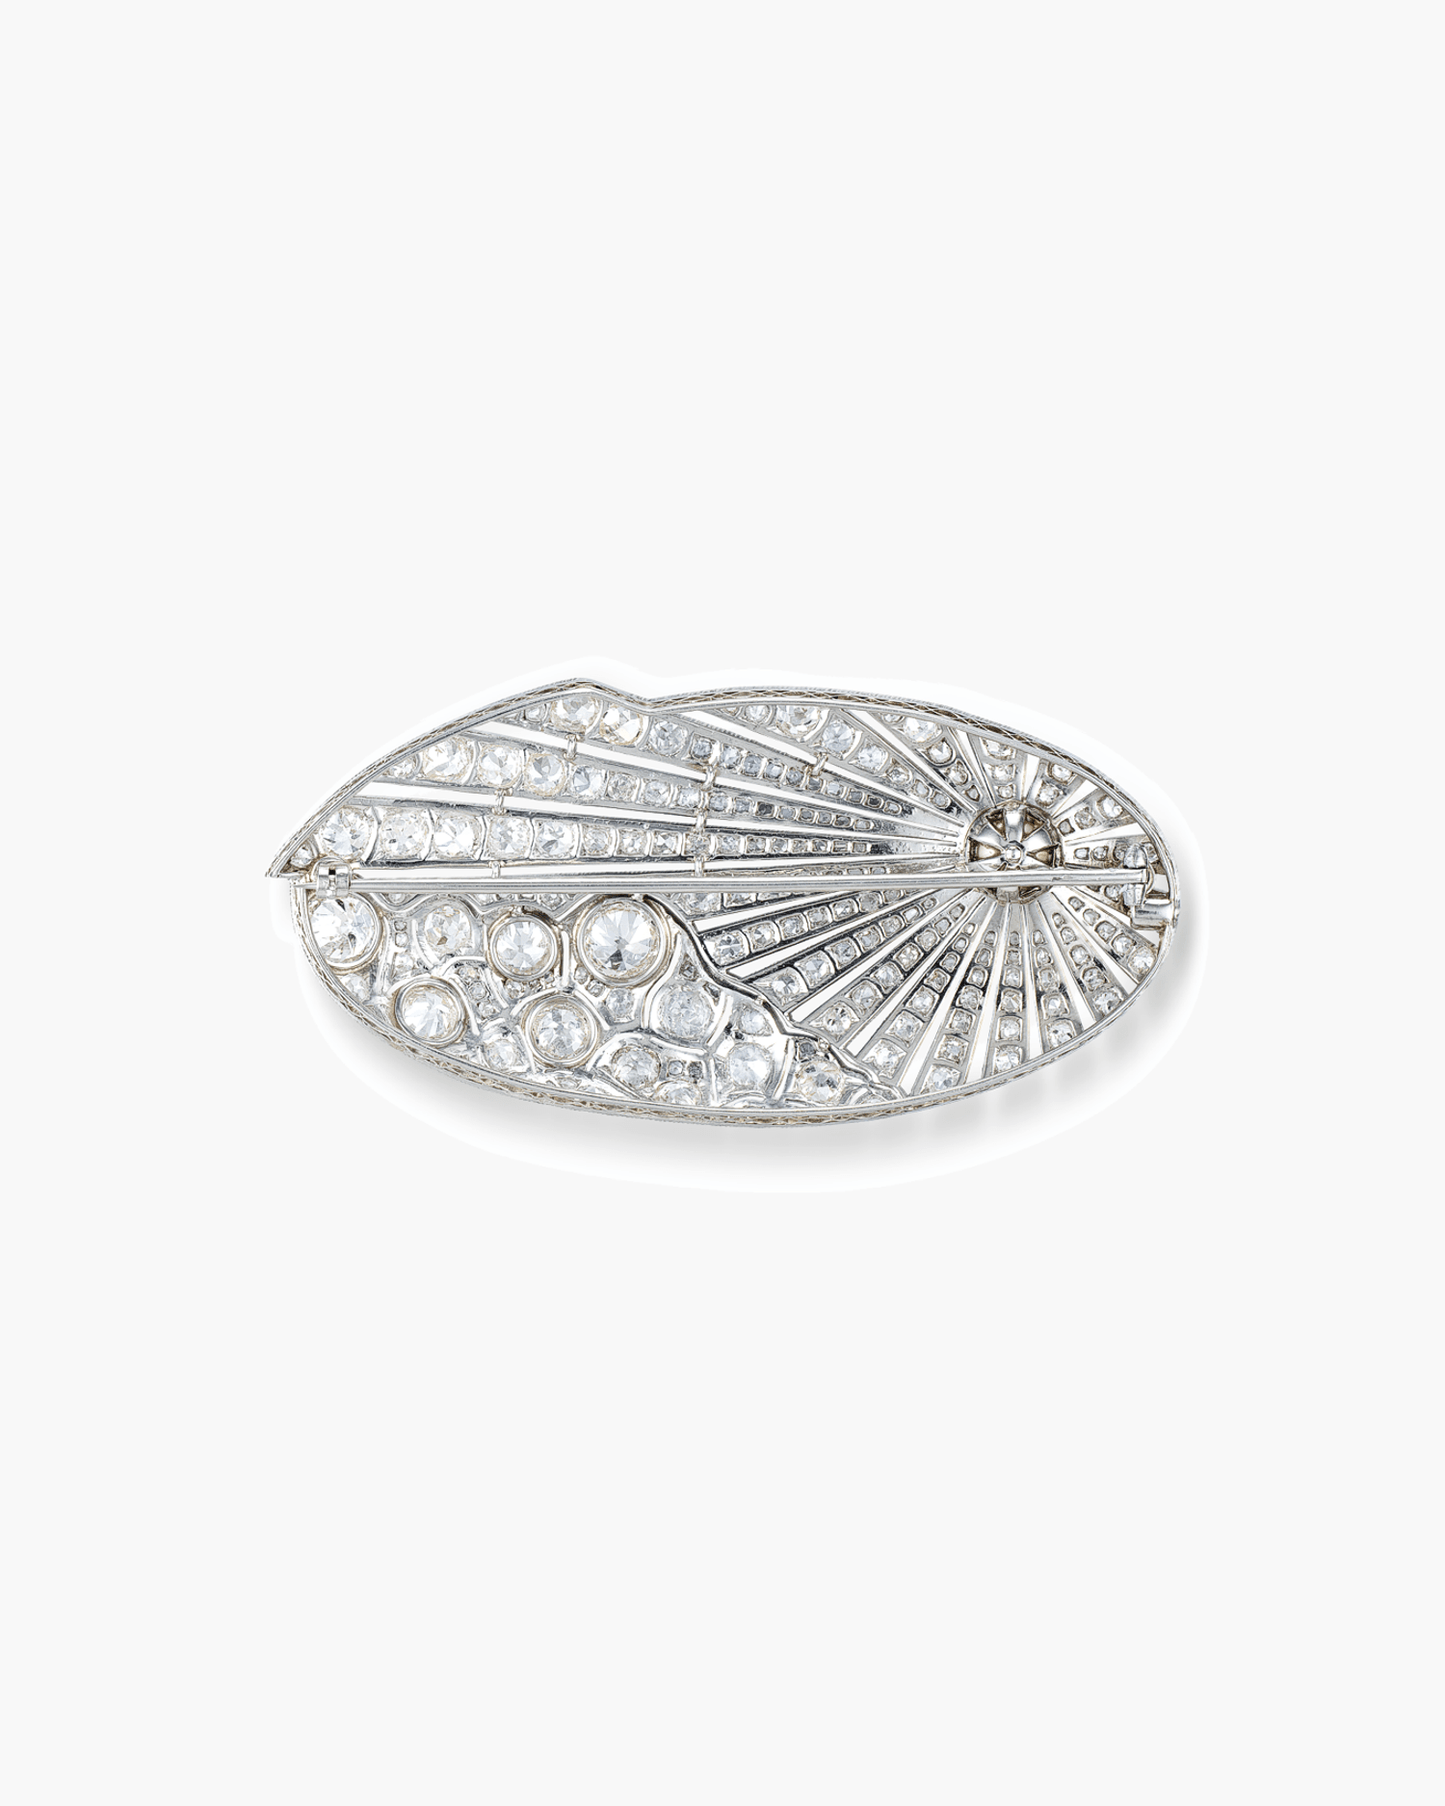 Art Deco Pearl and Diamond Brooch